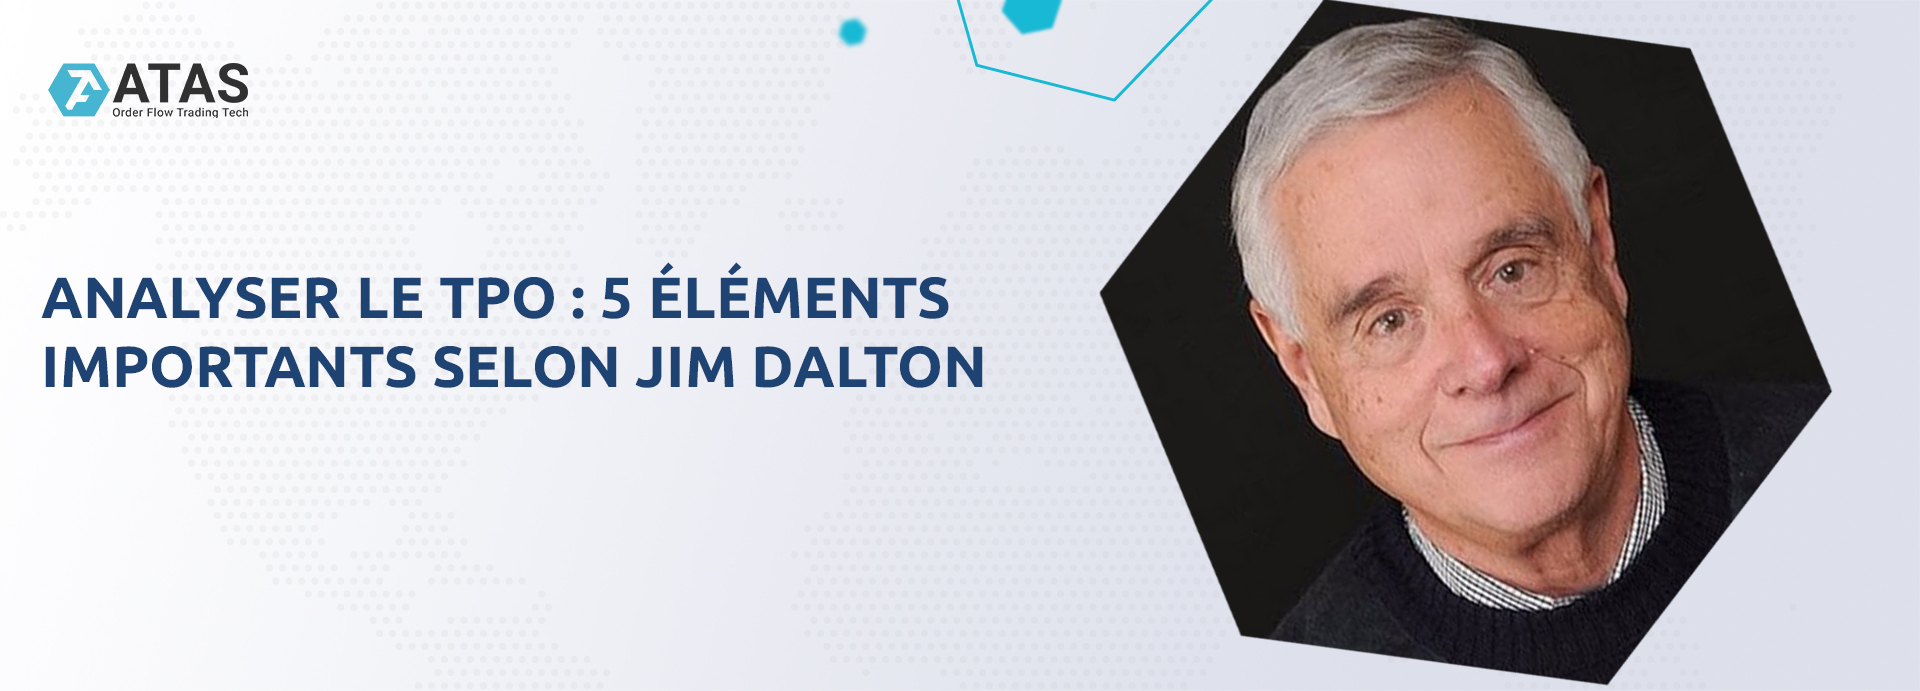 Analyser le TPO : 5 éléments importants selon Jim Dalton